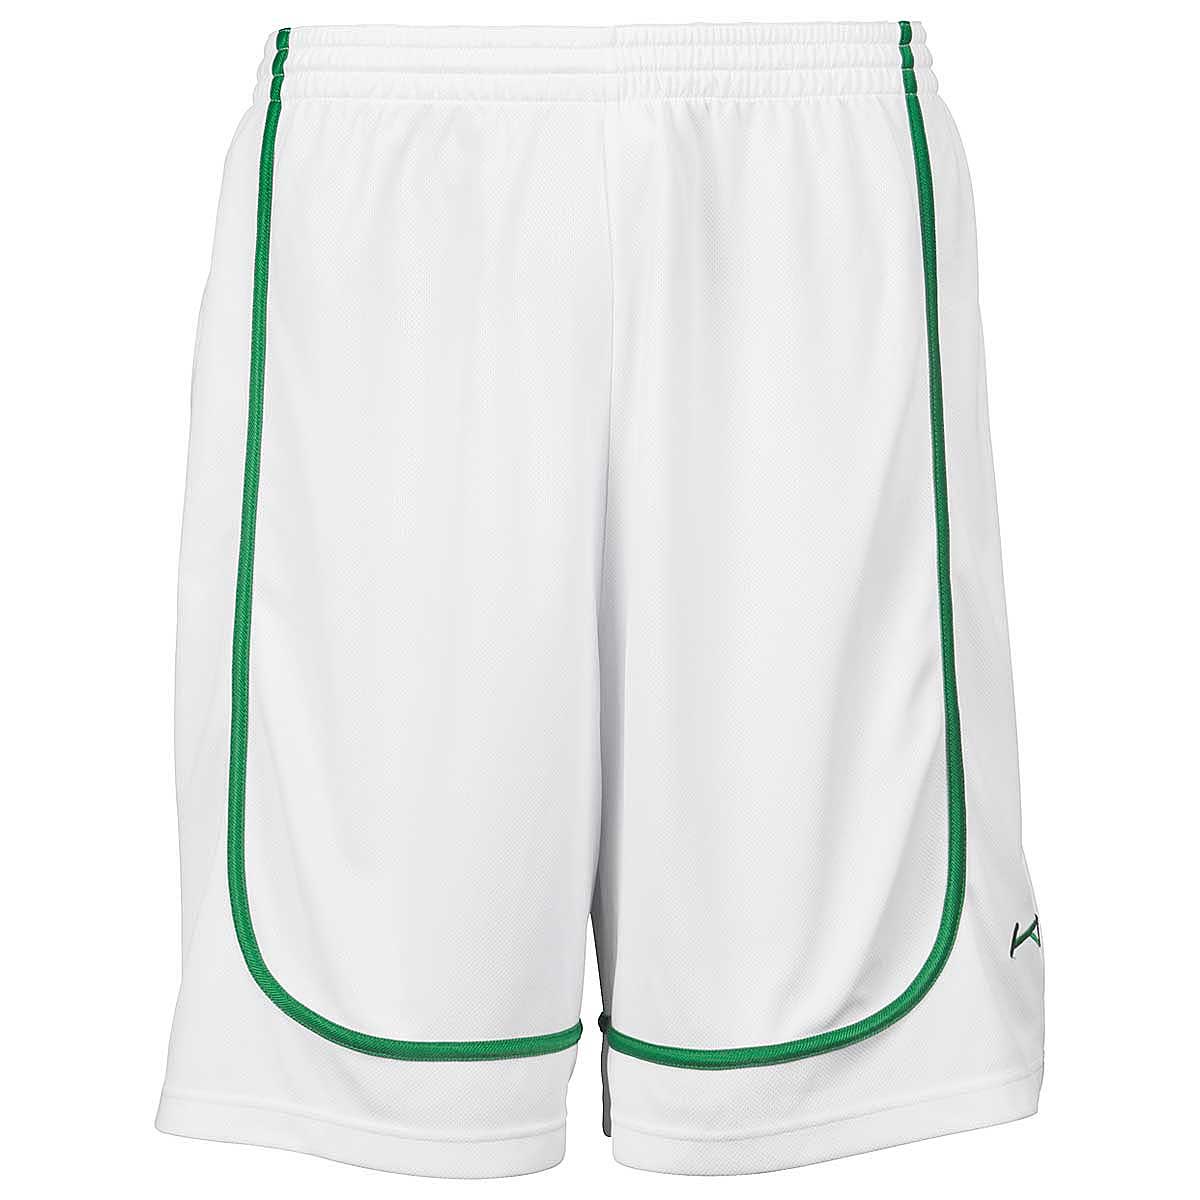 K1X Hardwood League Uniform Shorts, White/Boston Green